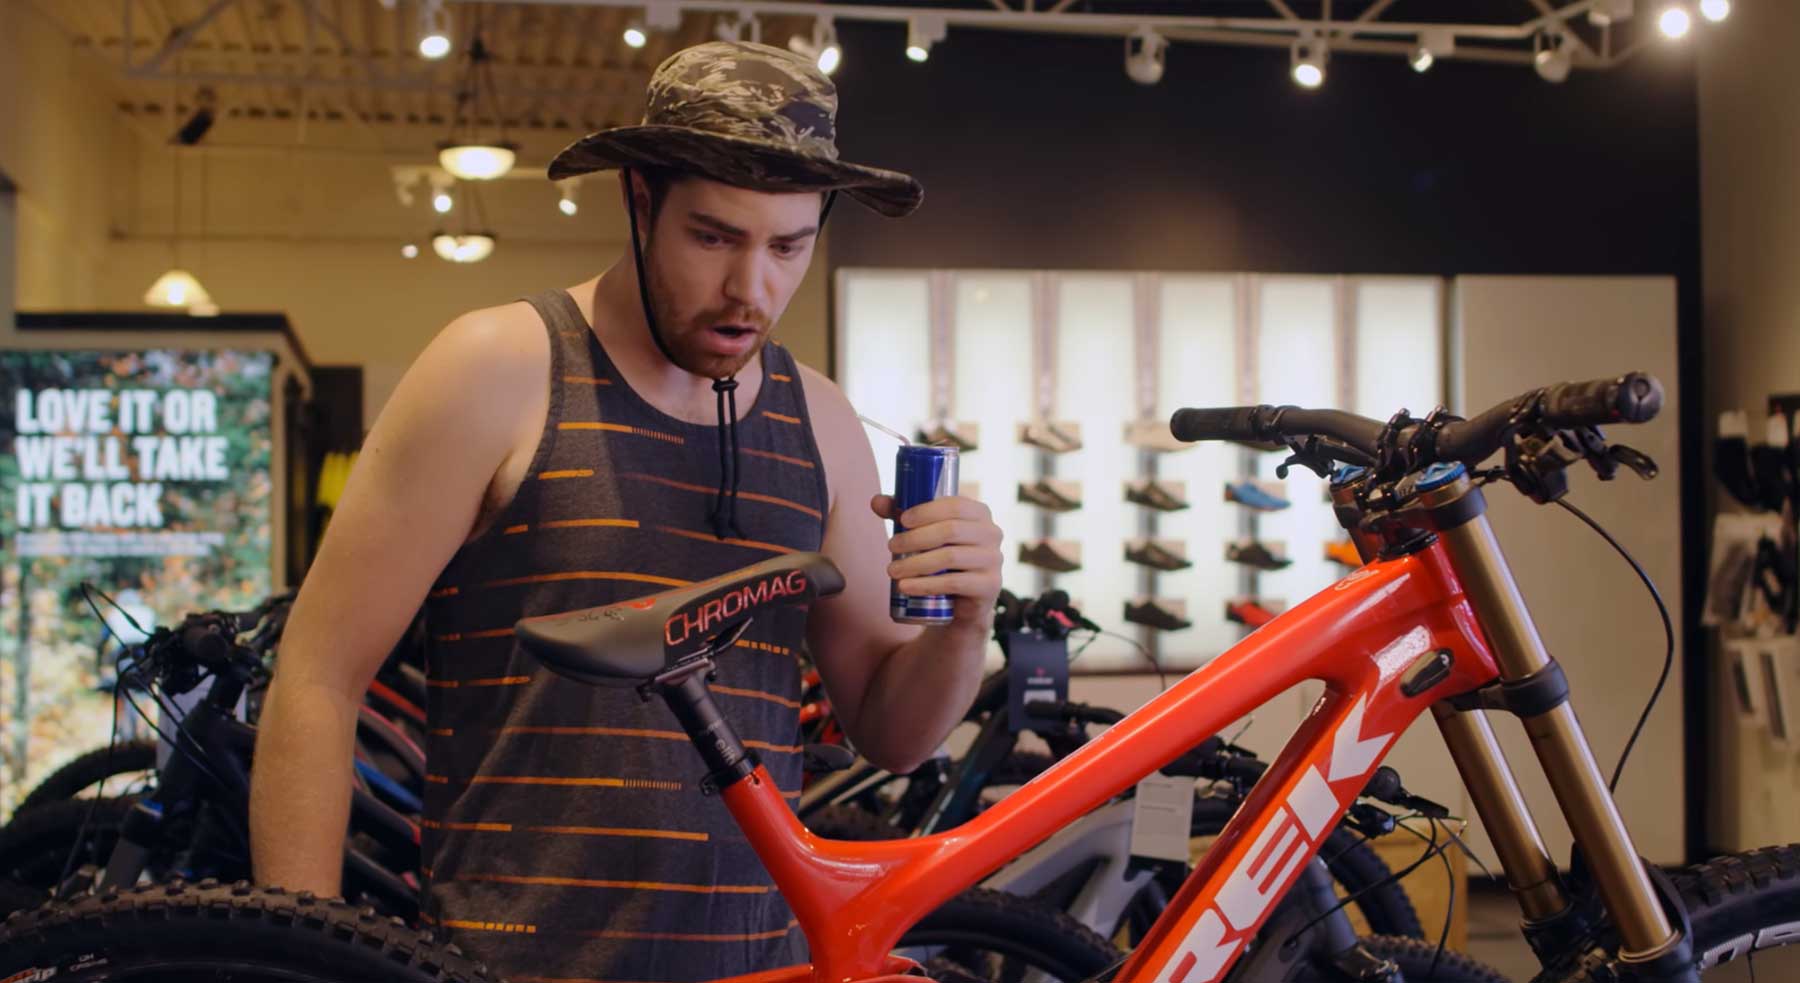 Comedy-Kurzfilm: "How to Buy a Mountain Bike" how-to-buy-a-mountainbike 